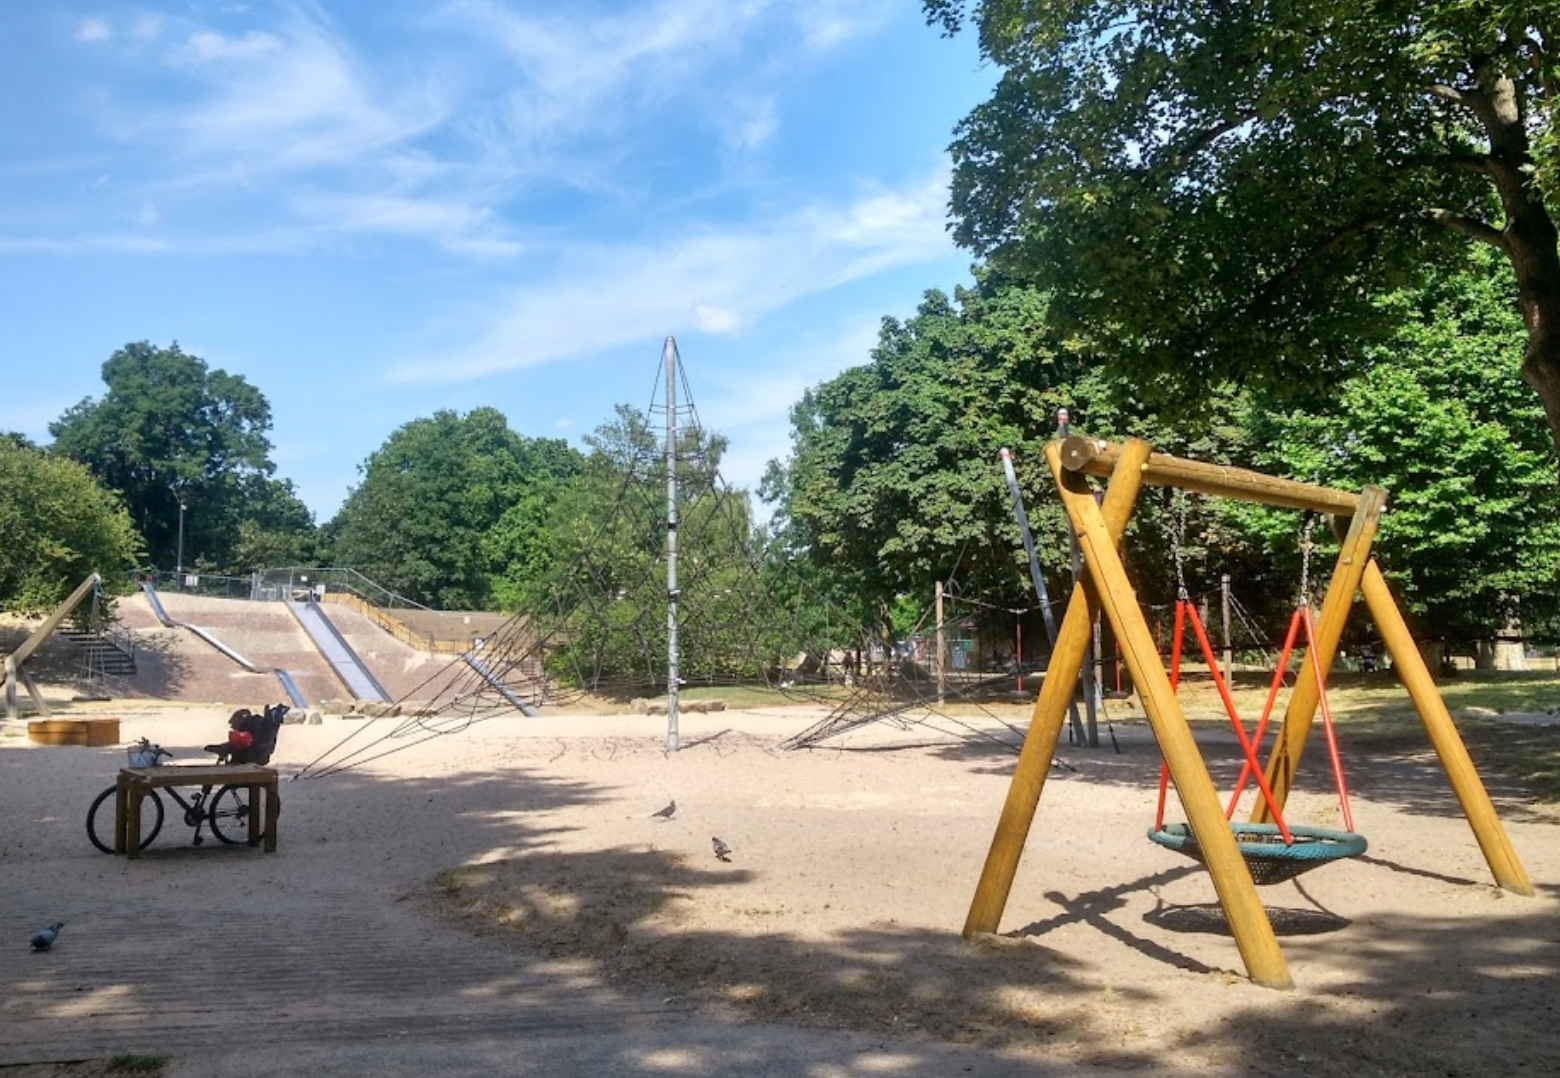 Victoria Park Kid’s Main Playground